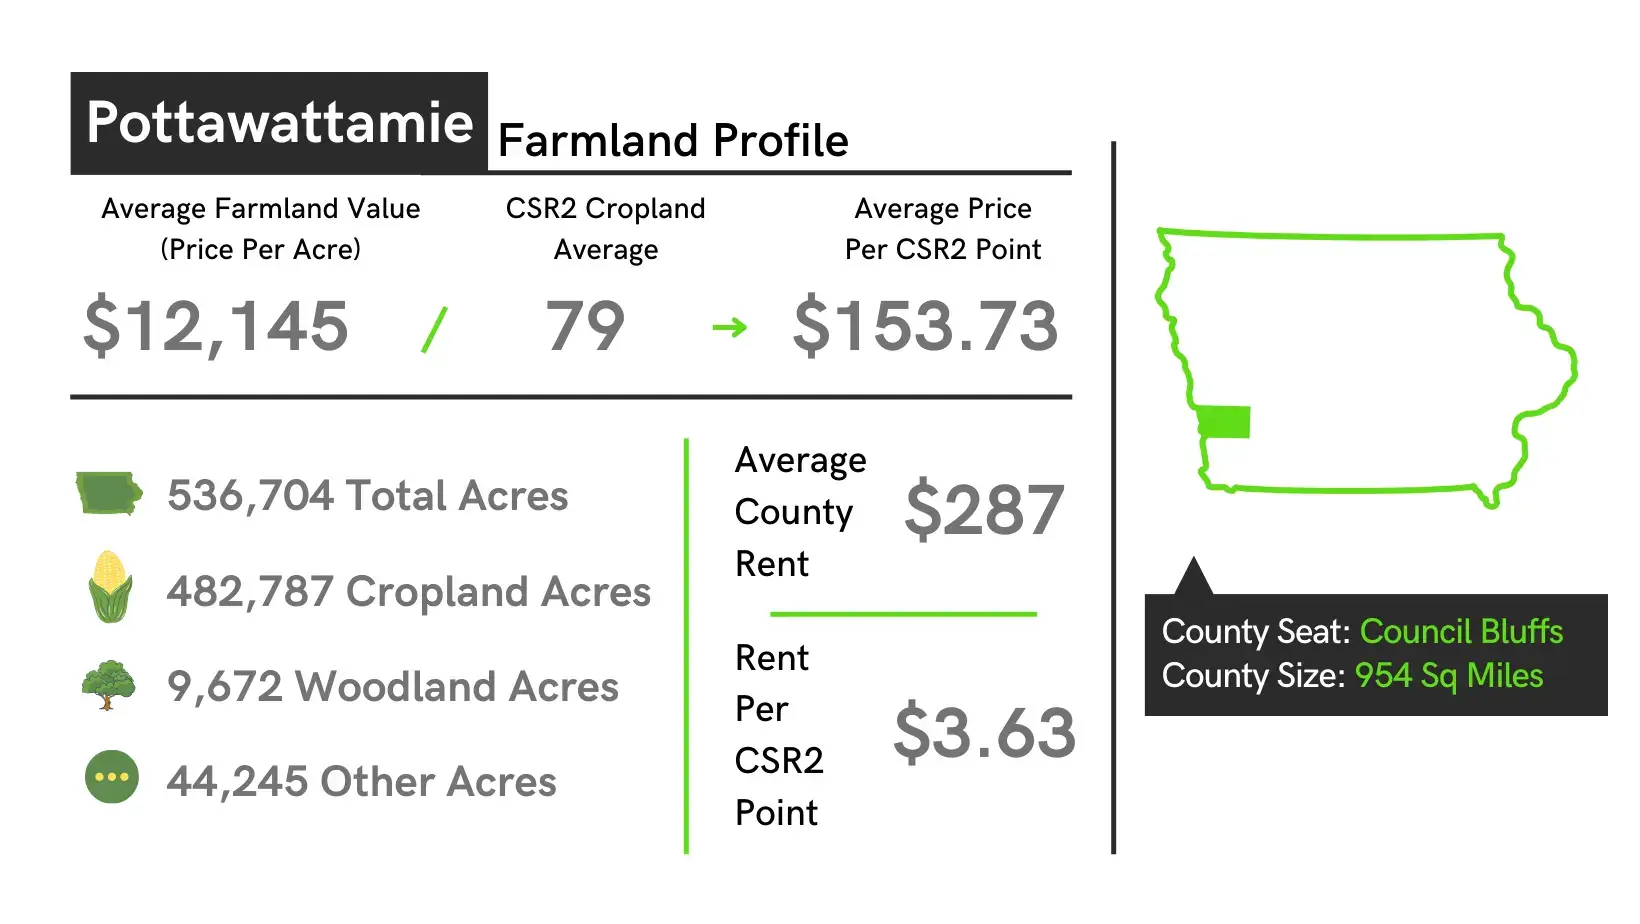 Pottawattamie County Farmland Profile